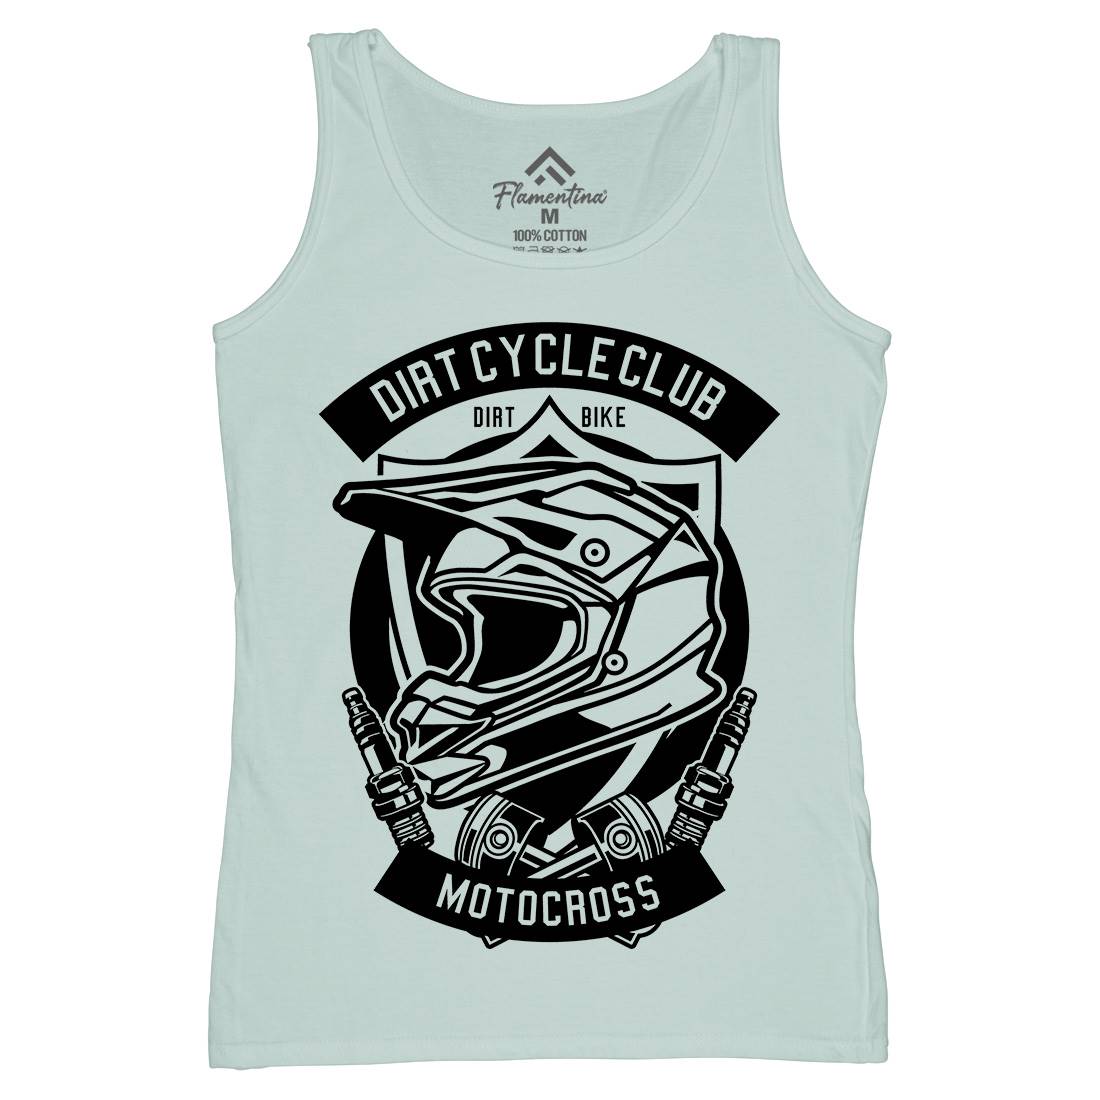 Dirty Cycle Club Womens Organic Tank Top Vest Motorcycles B532